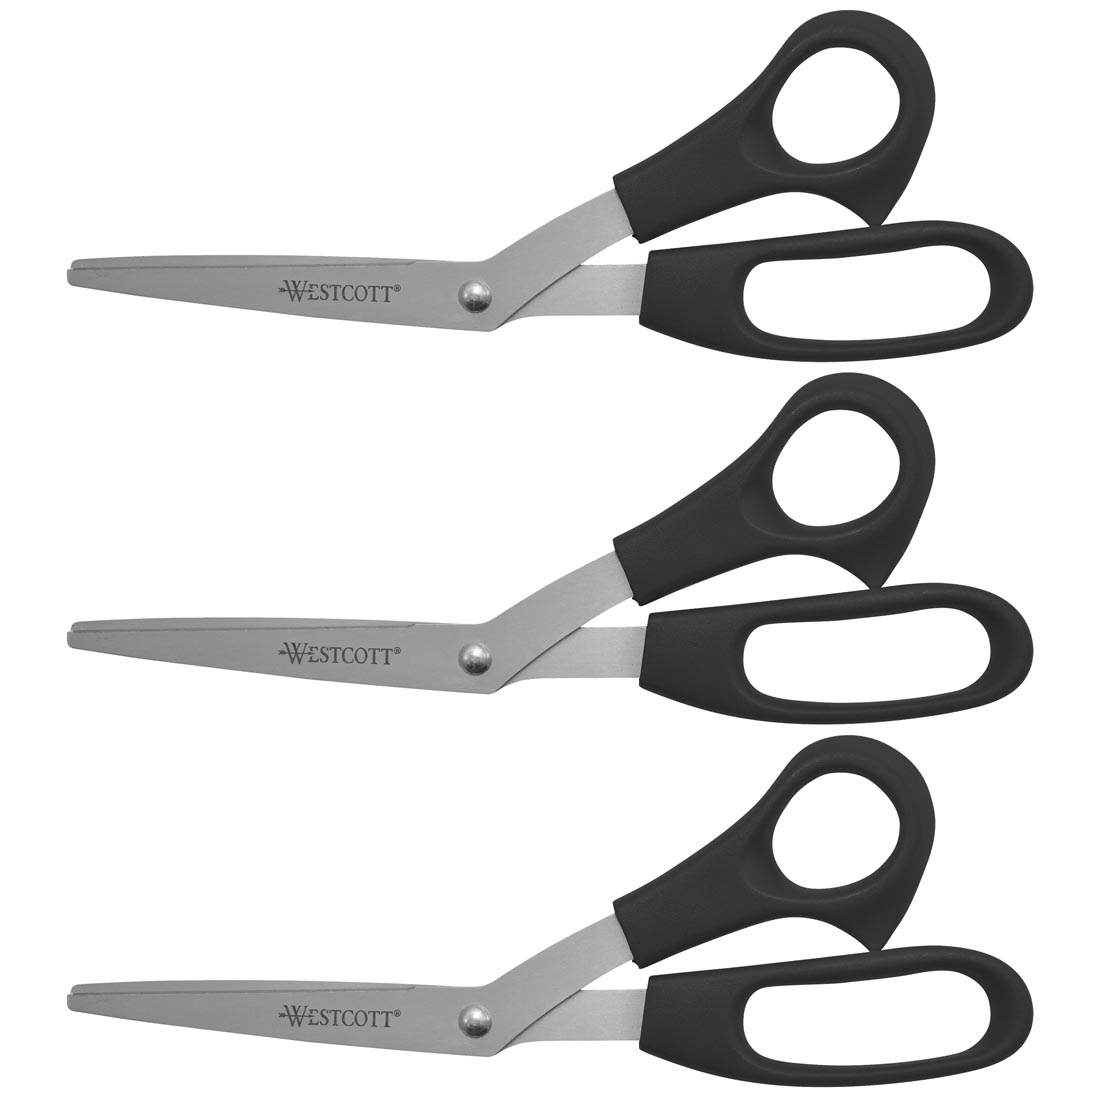 three pairs of angled scissors with black handles